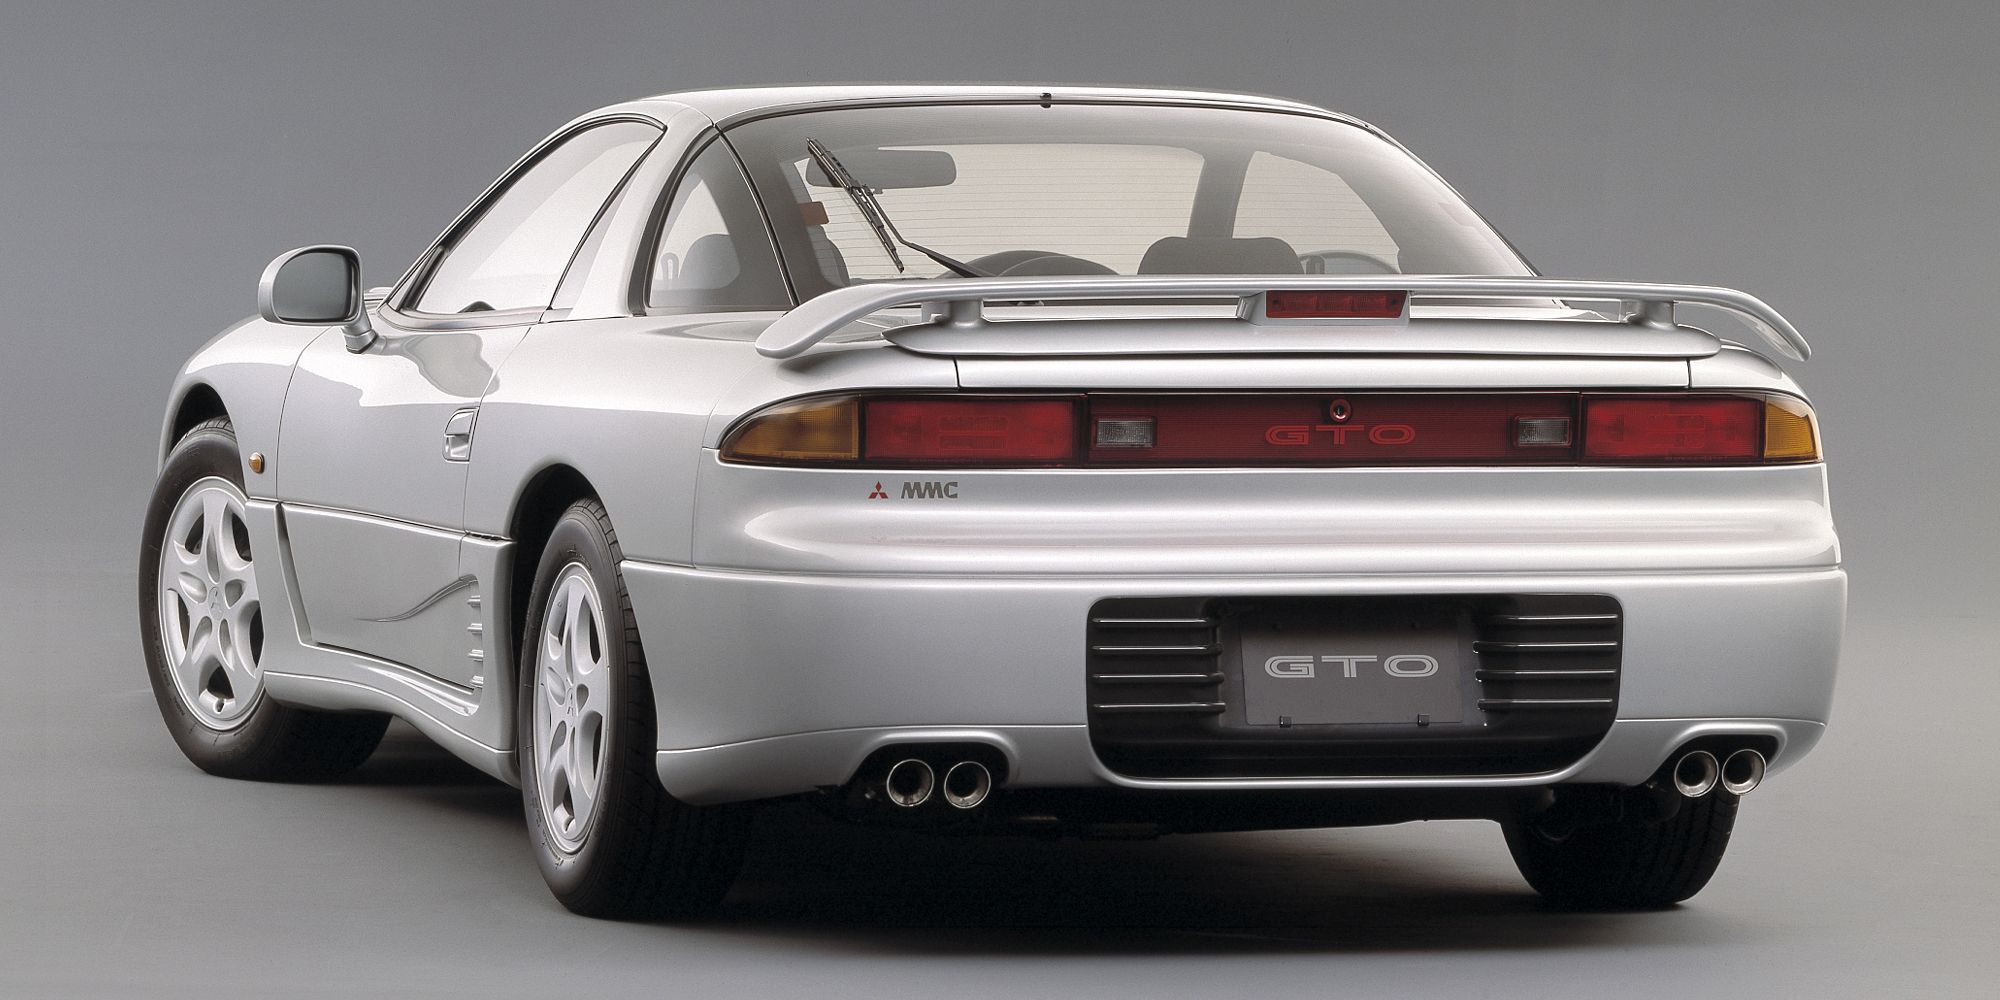 The rear of a silver GTO, studio shot